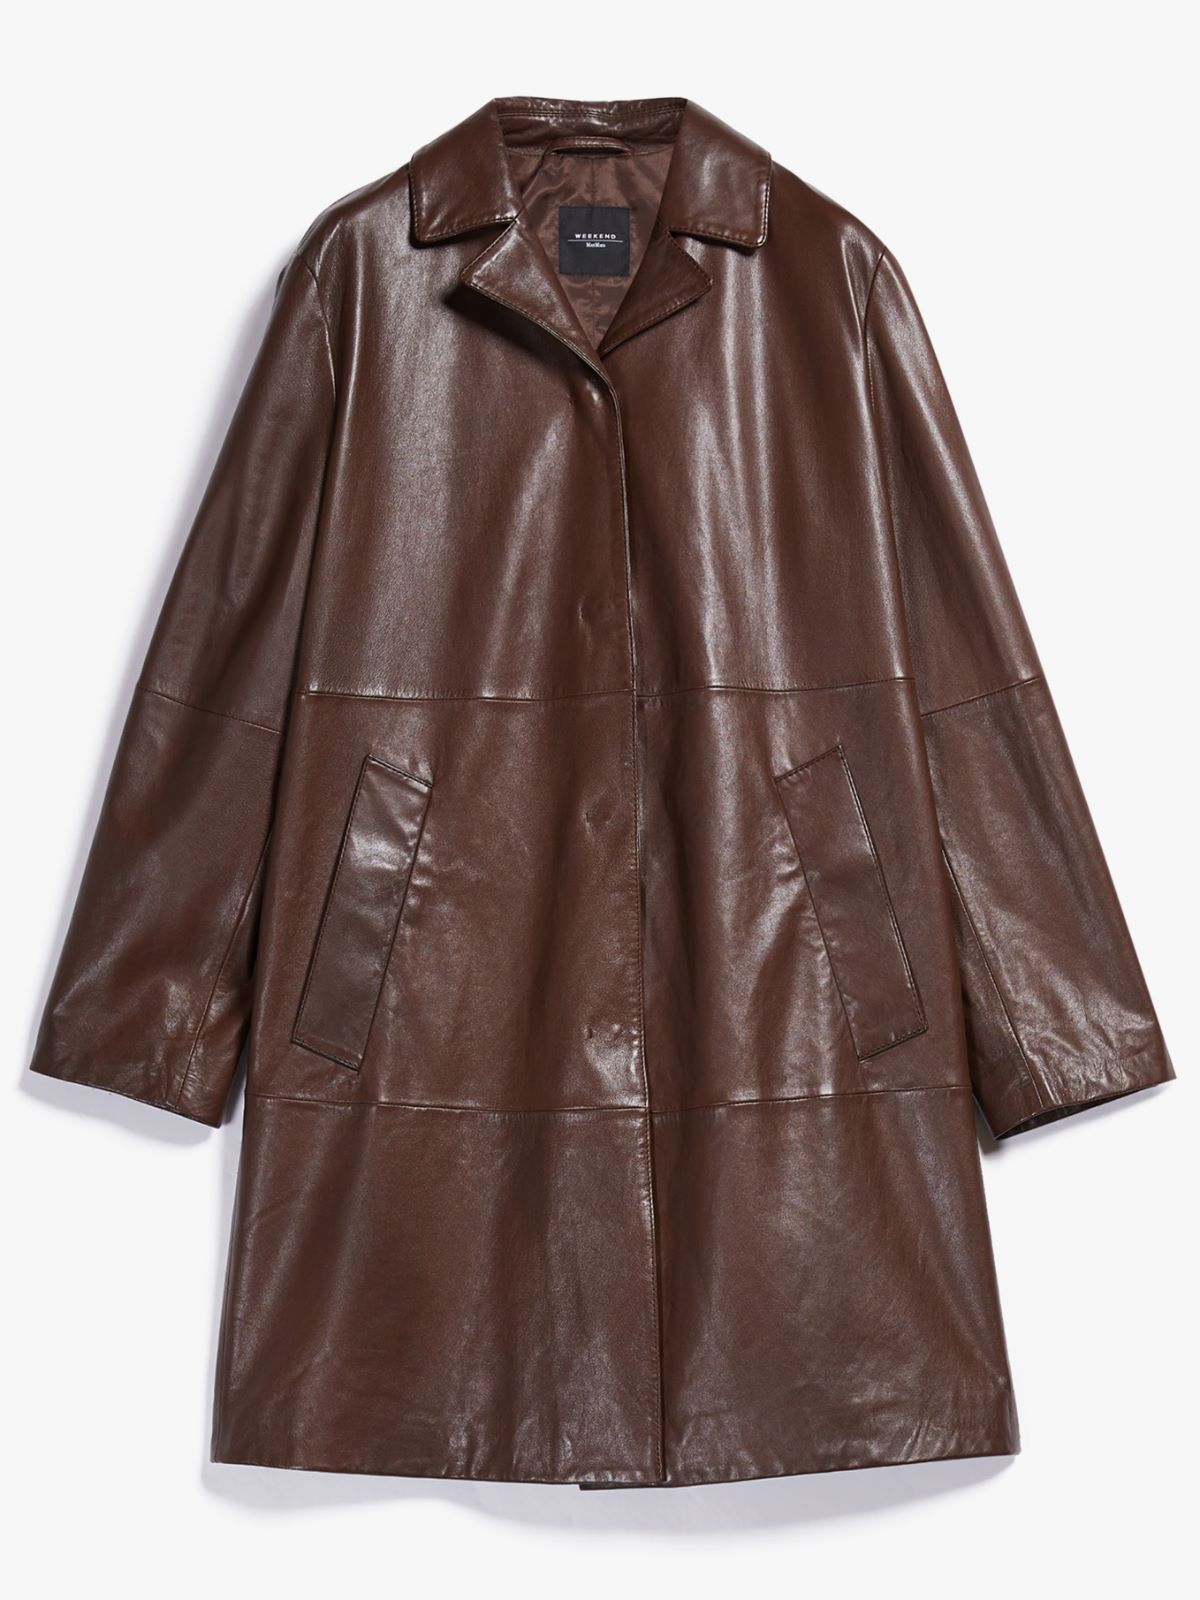 Nappa leather duster coat, tobacco | Weekend Max Mara